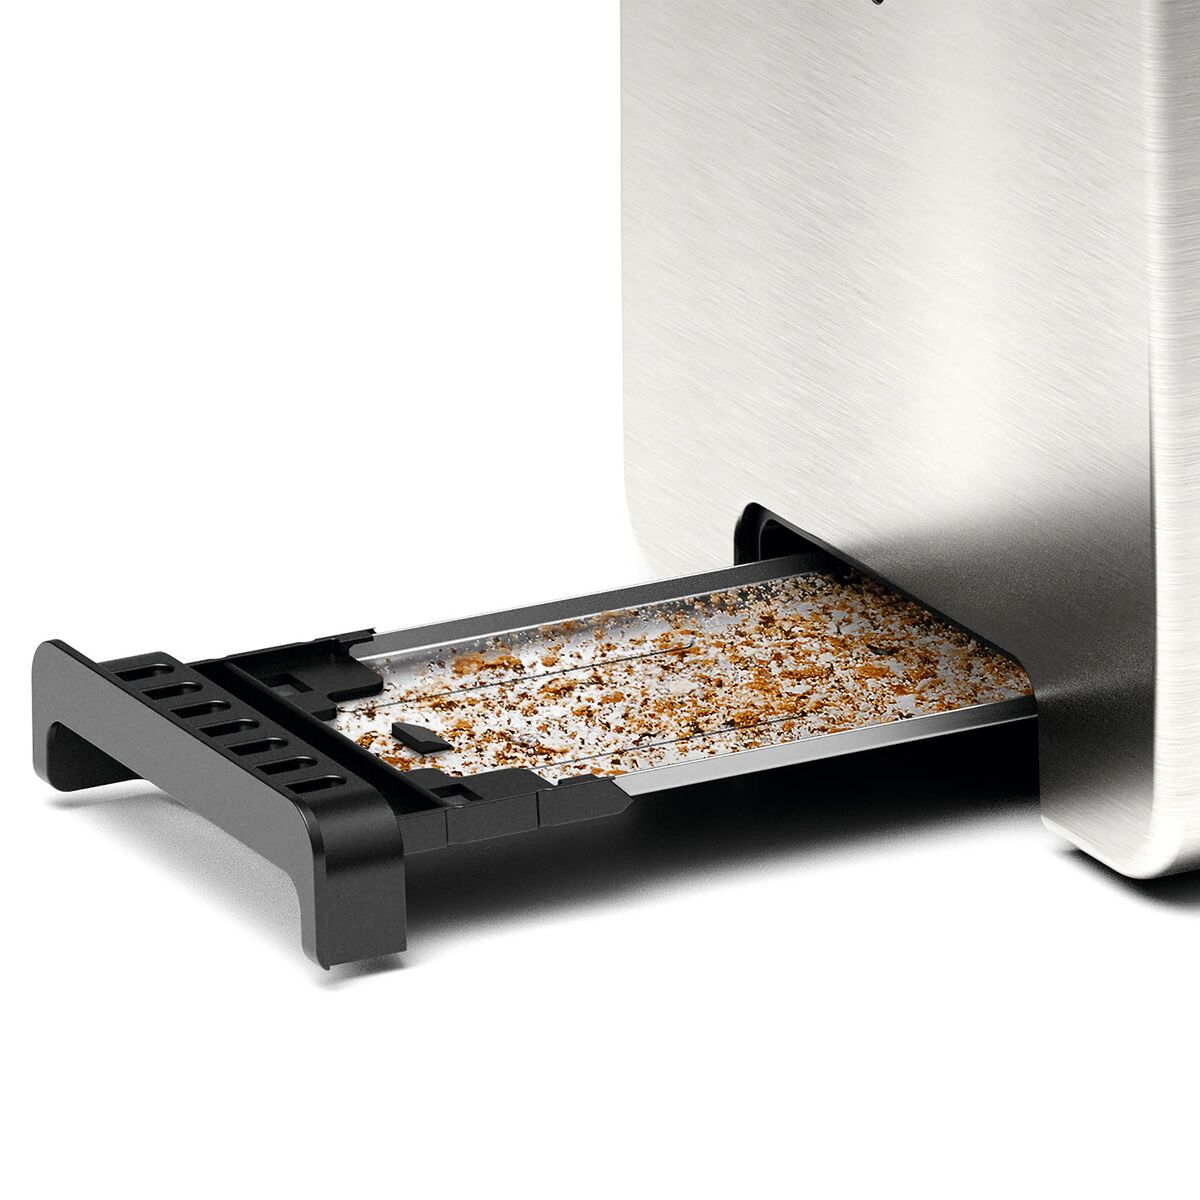 Kaufe Toaster BOSCH TAT4P420 970W 970 W bei AWK Flagship um € 72.00